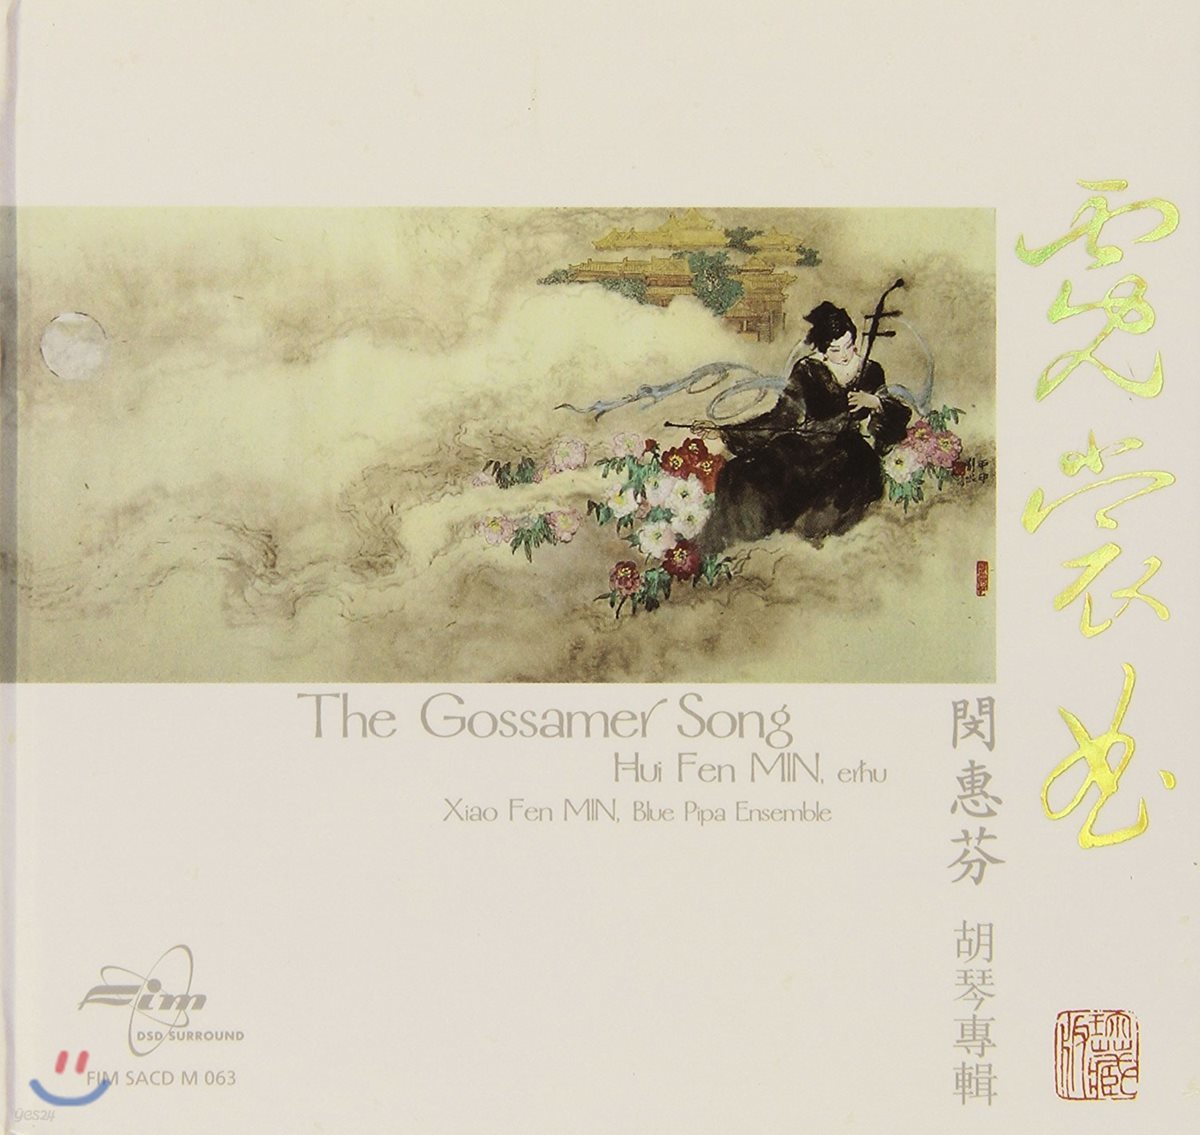 Hui Fen Min 아름다운 중국 얼후의 명곡 - 예상곡 (The Gossamer Song)